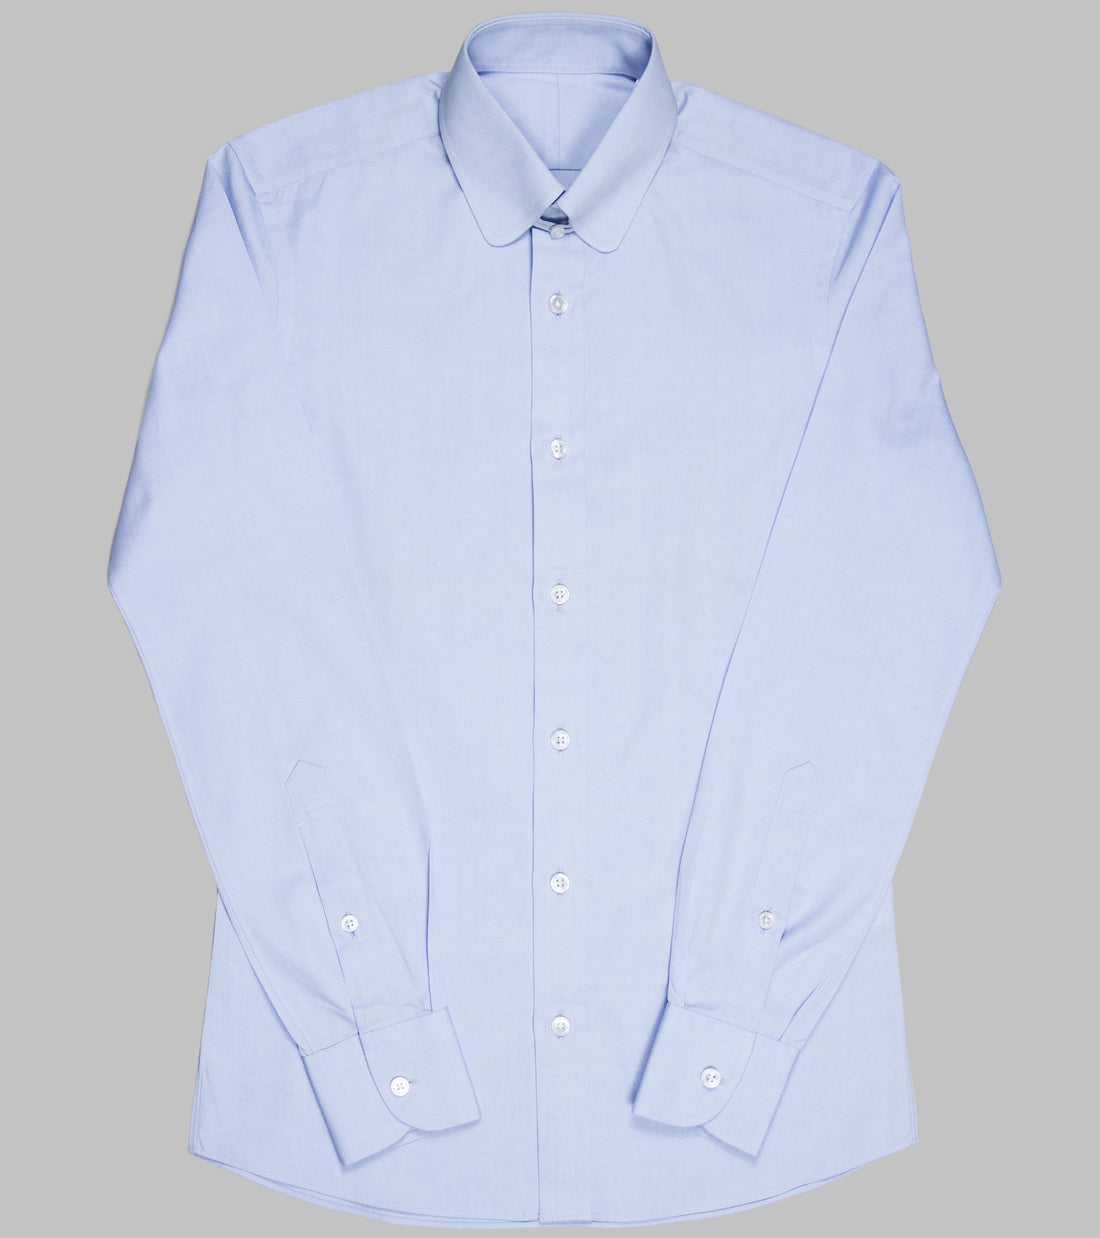  Bryceland's Club Tab Collar Shirt Light Blue